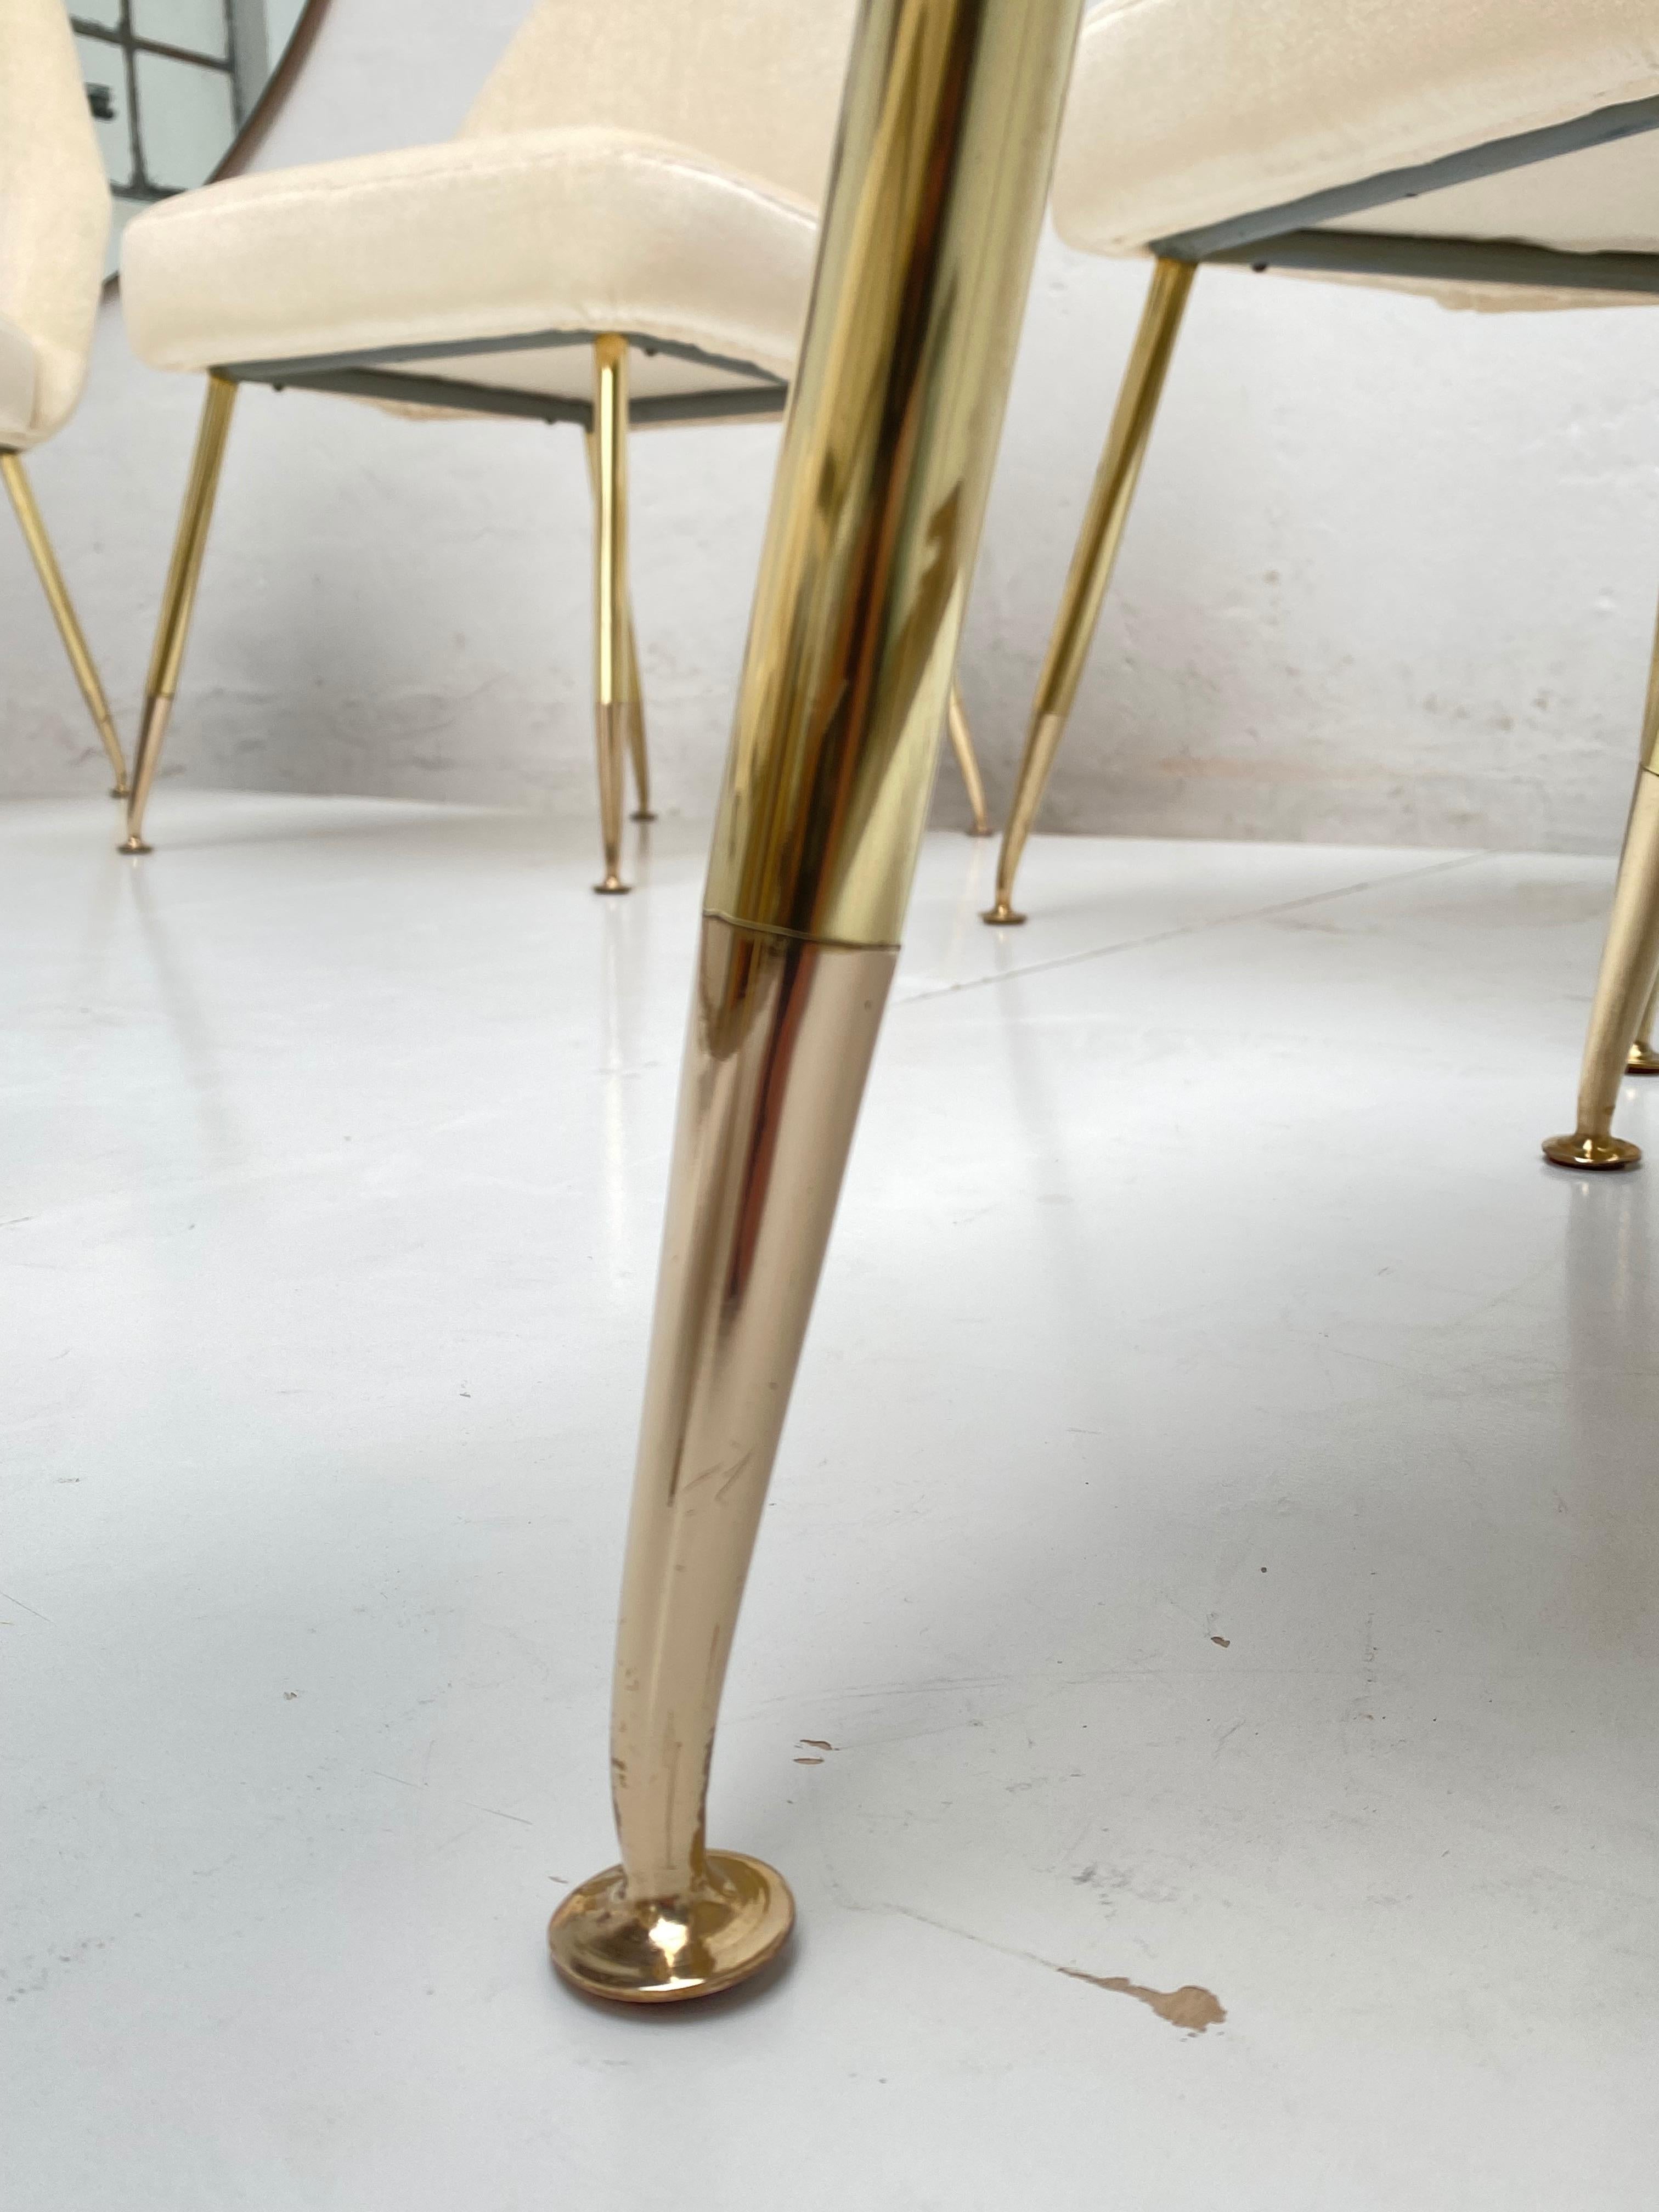 8 Brass Leg Chairs by Pagani, Partner of Gio Ponti & Lina Bo Bardi, 1952, Arflex 1